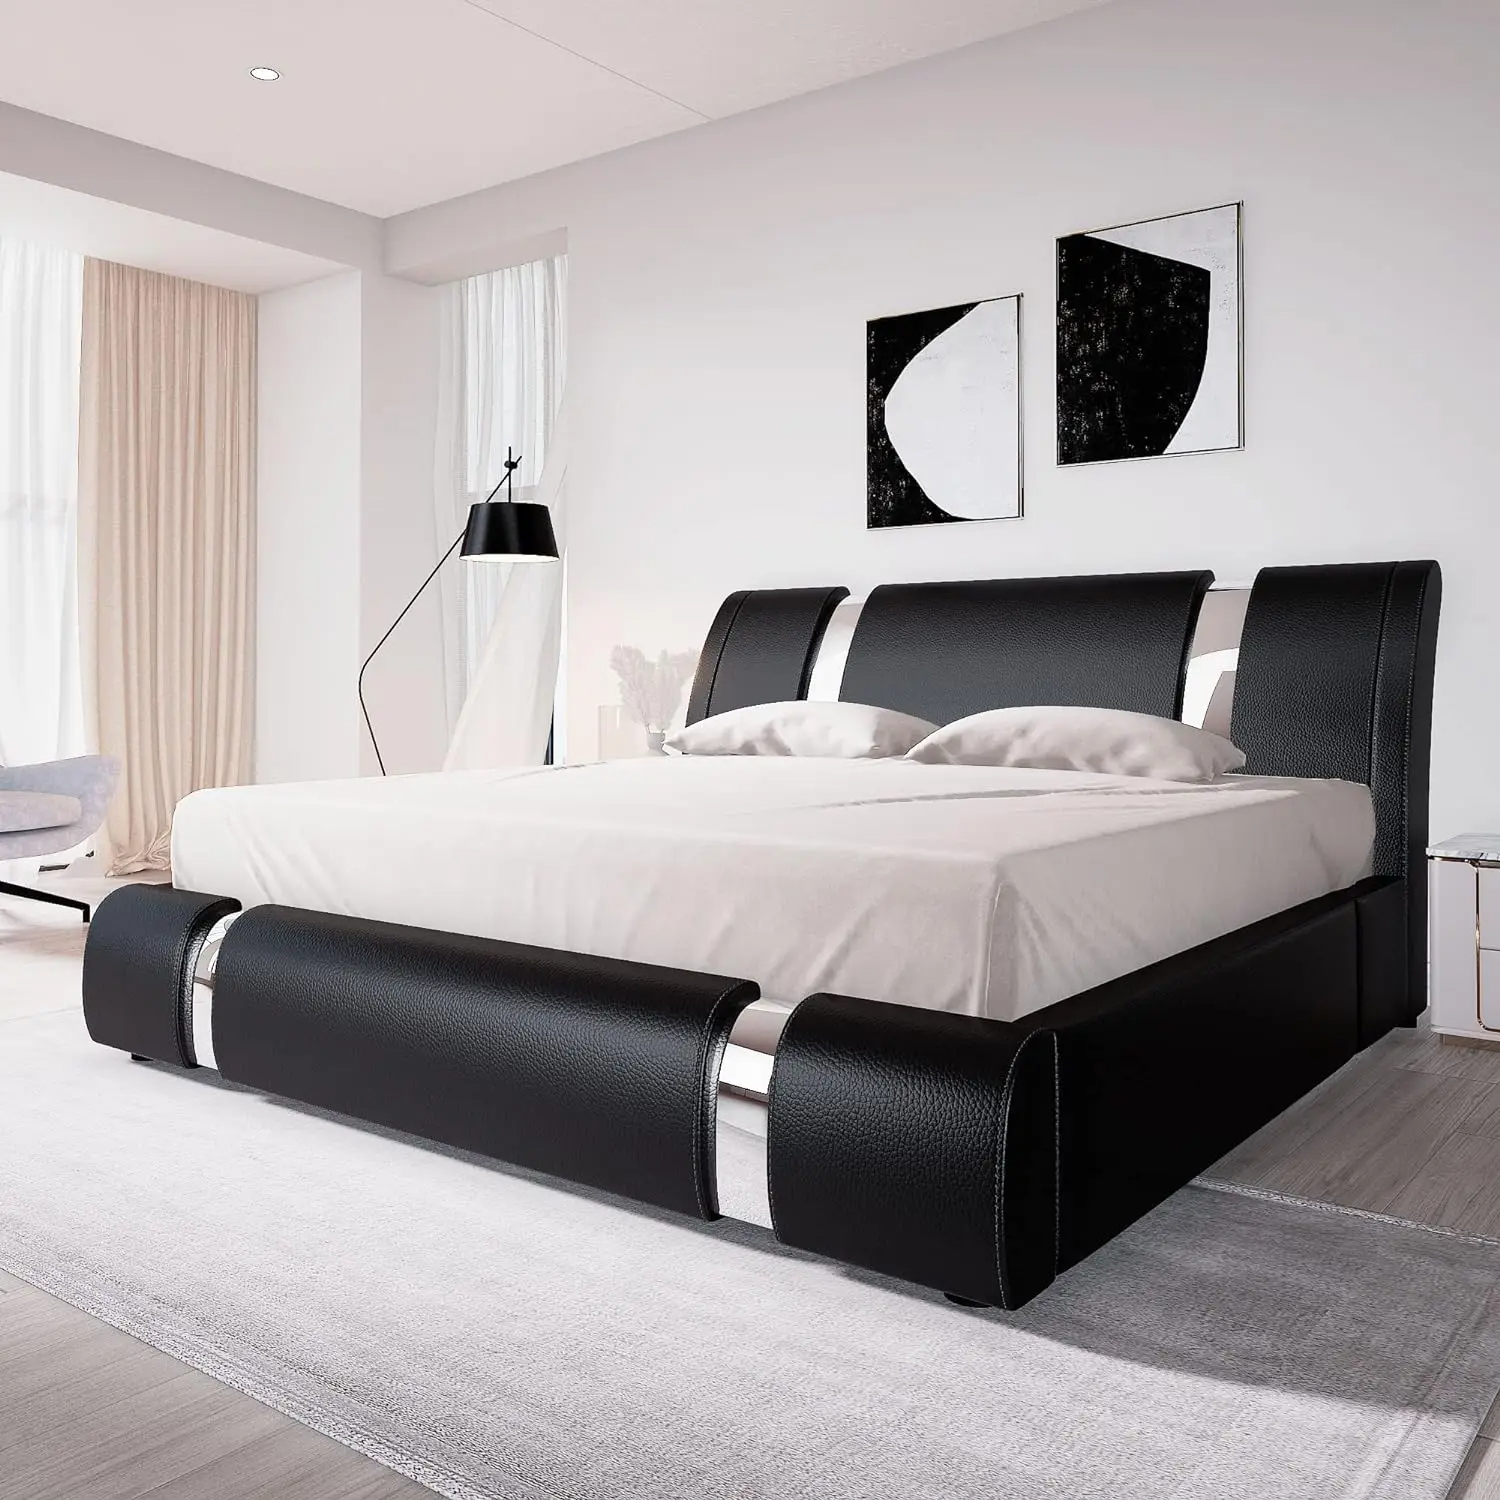 California King Bed: The Answer to Spacious and Comfortable Sleep插图